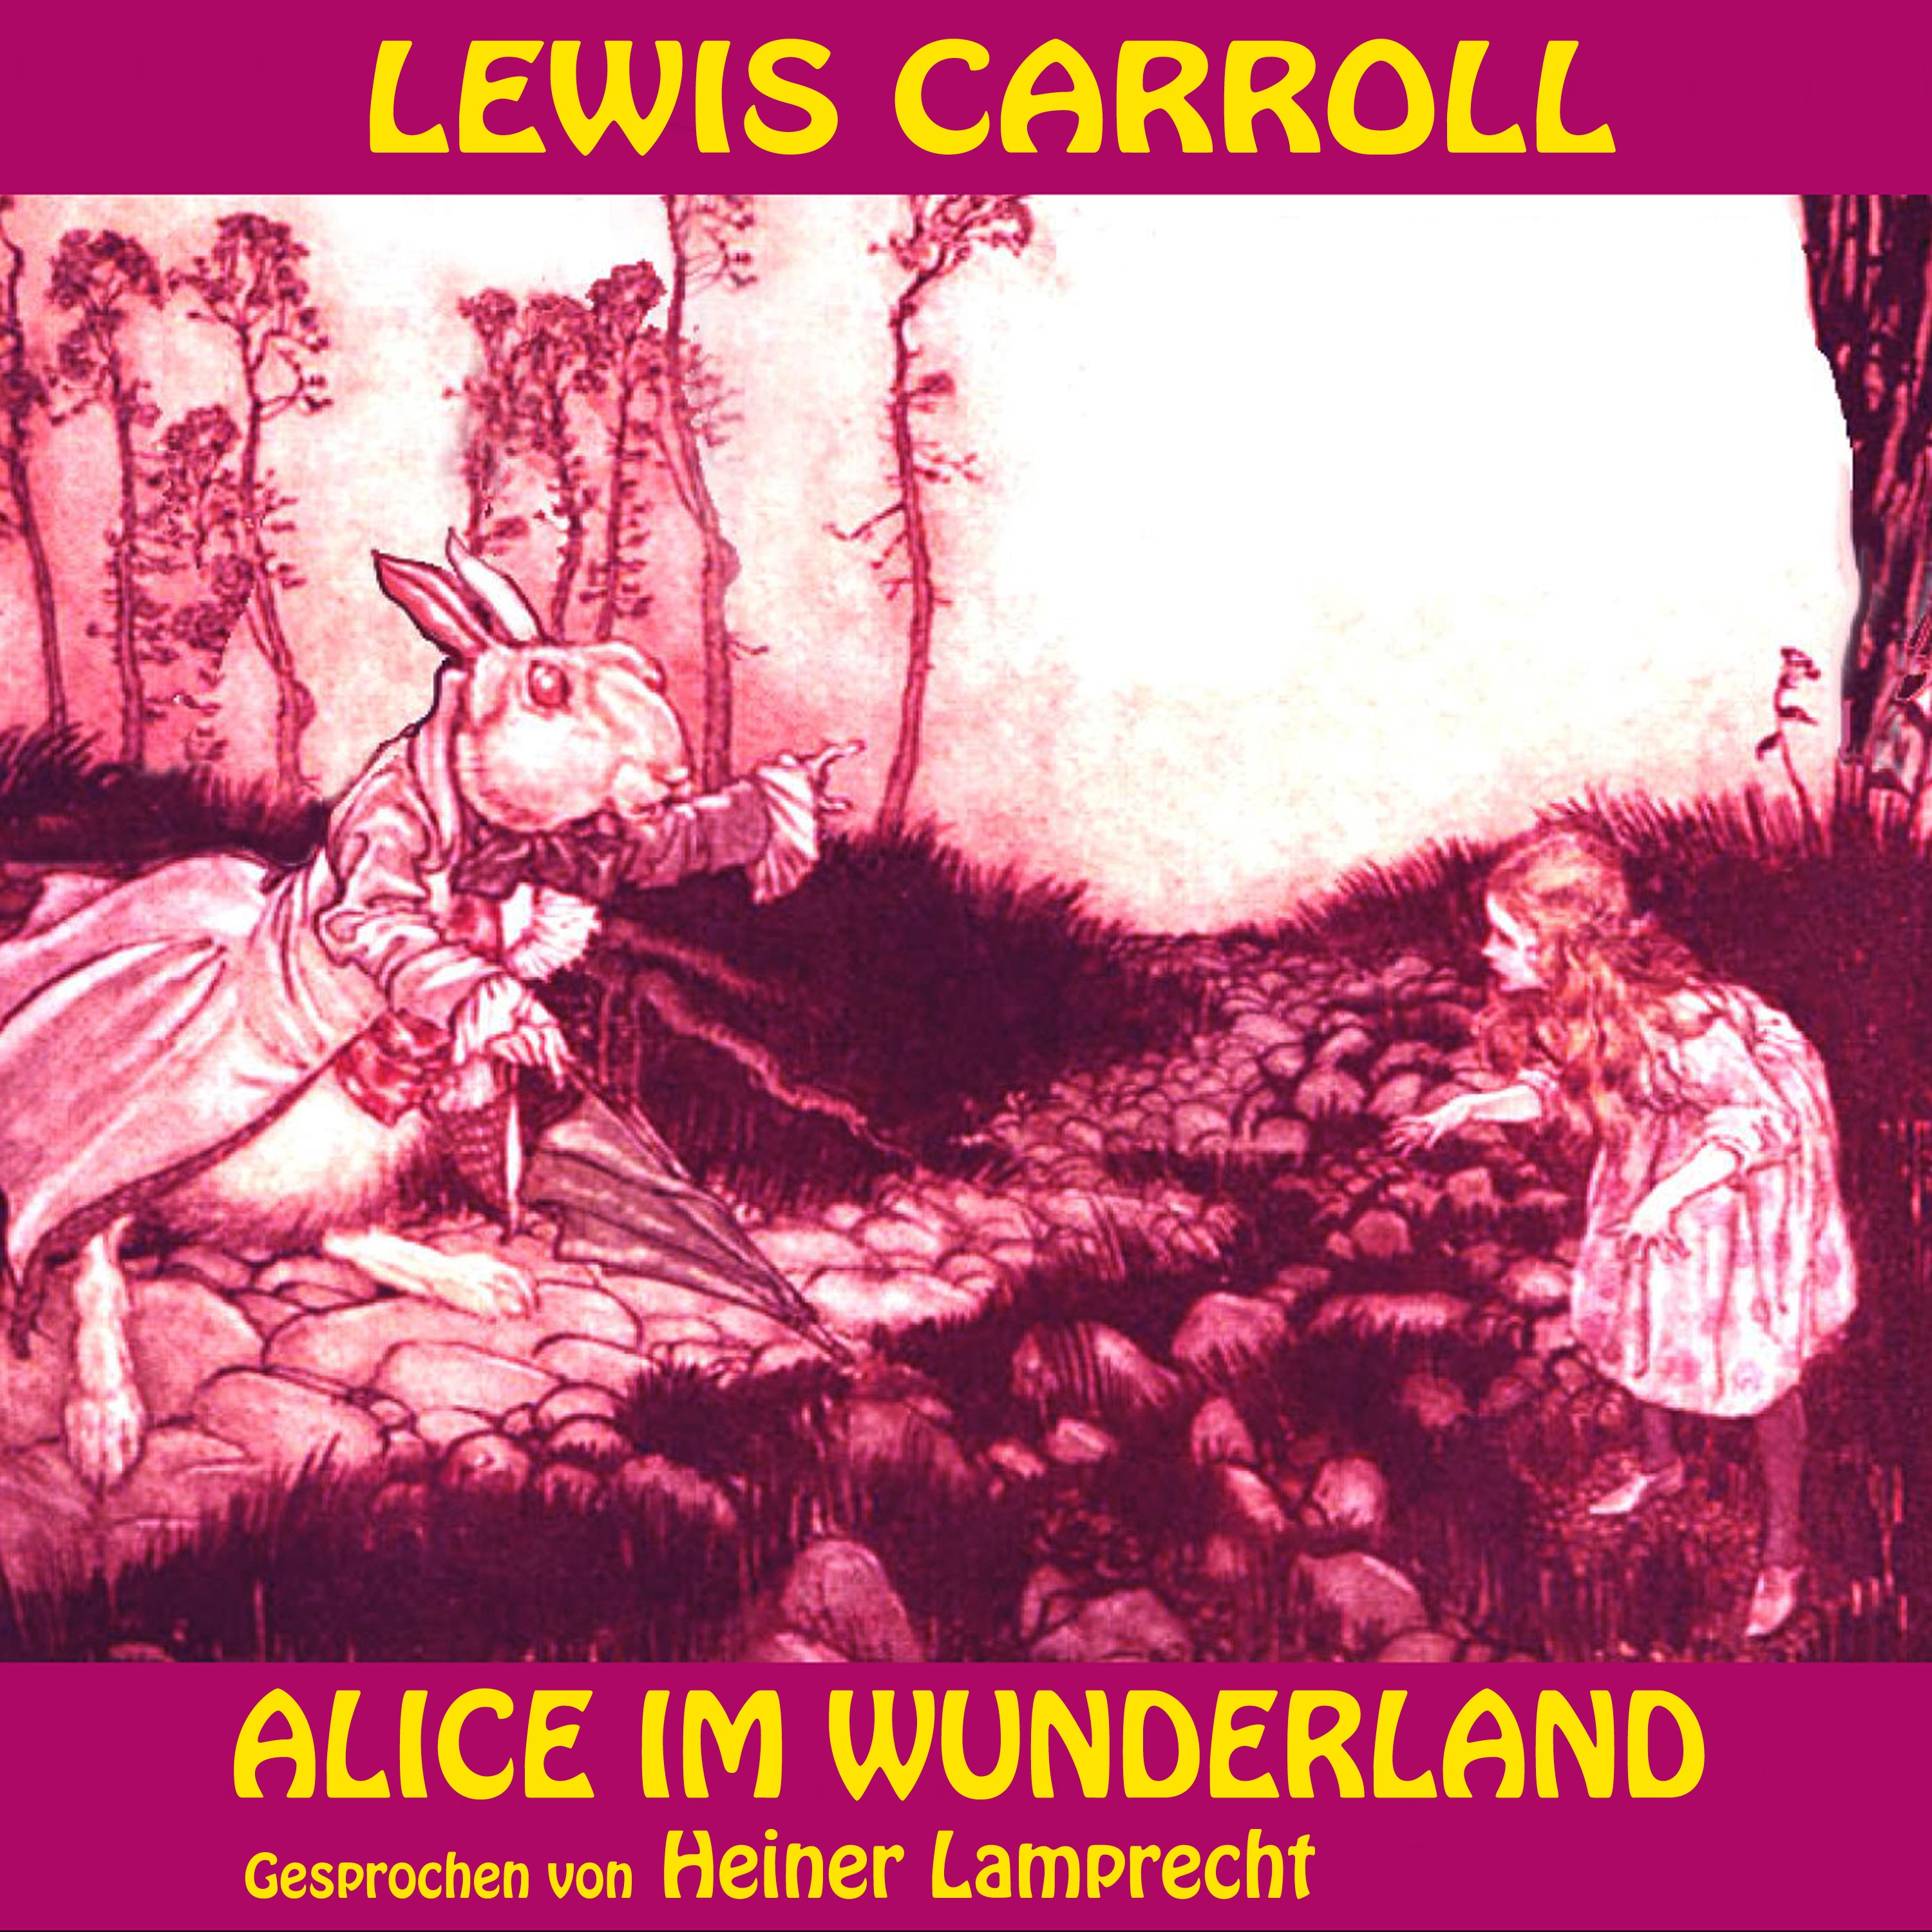 Kapitel 3: Alice im Wunderland (Teil 13)